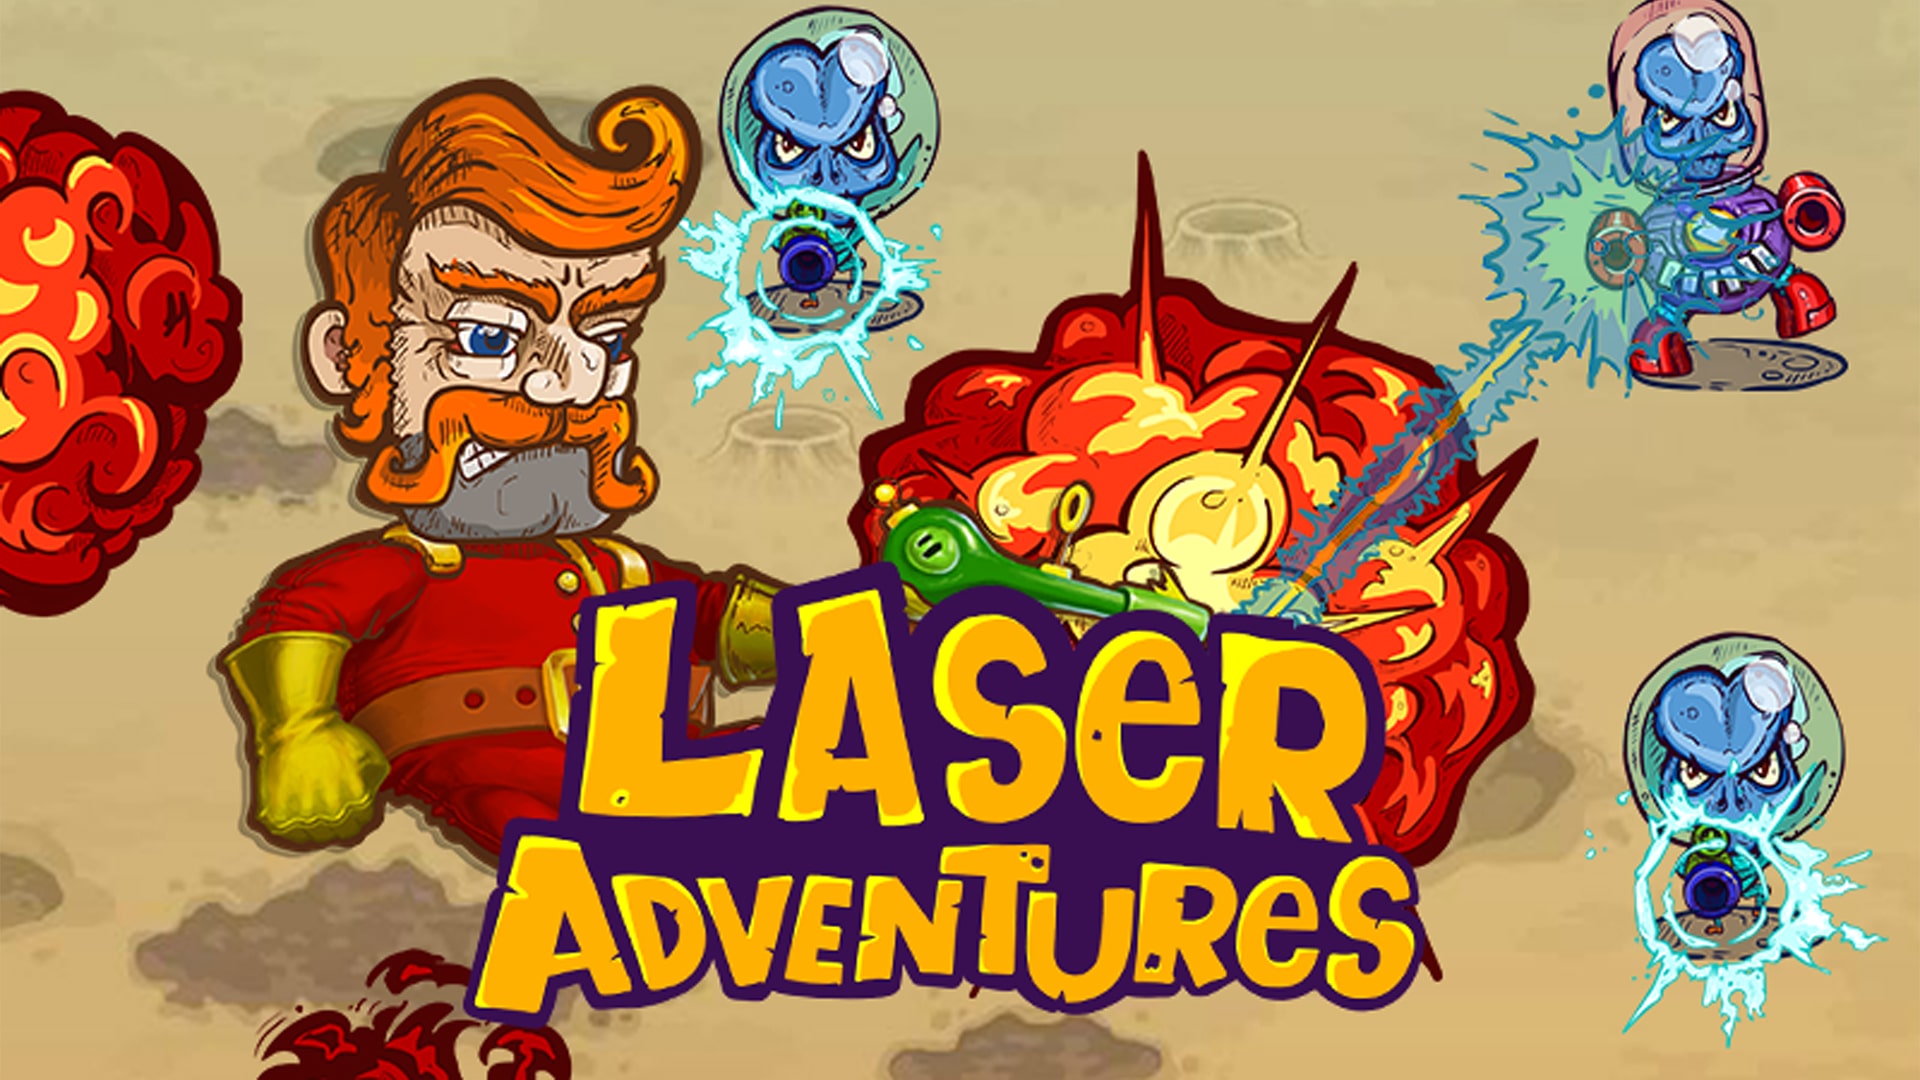 Laser Adventures game showcasing a futuristic laser tag battle scene